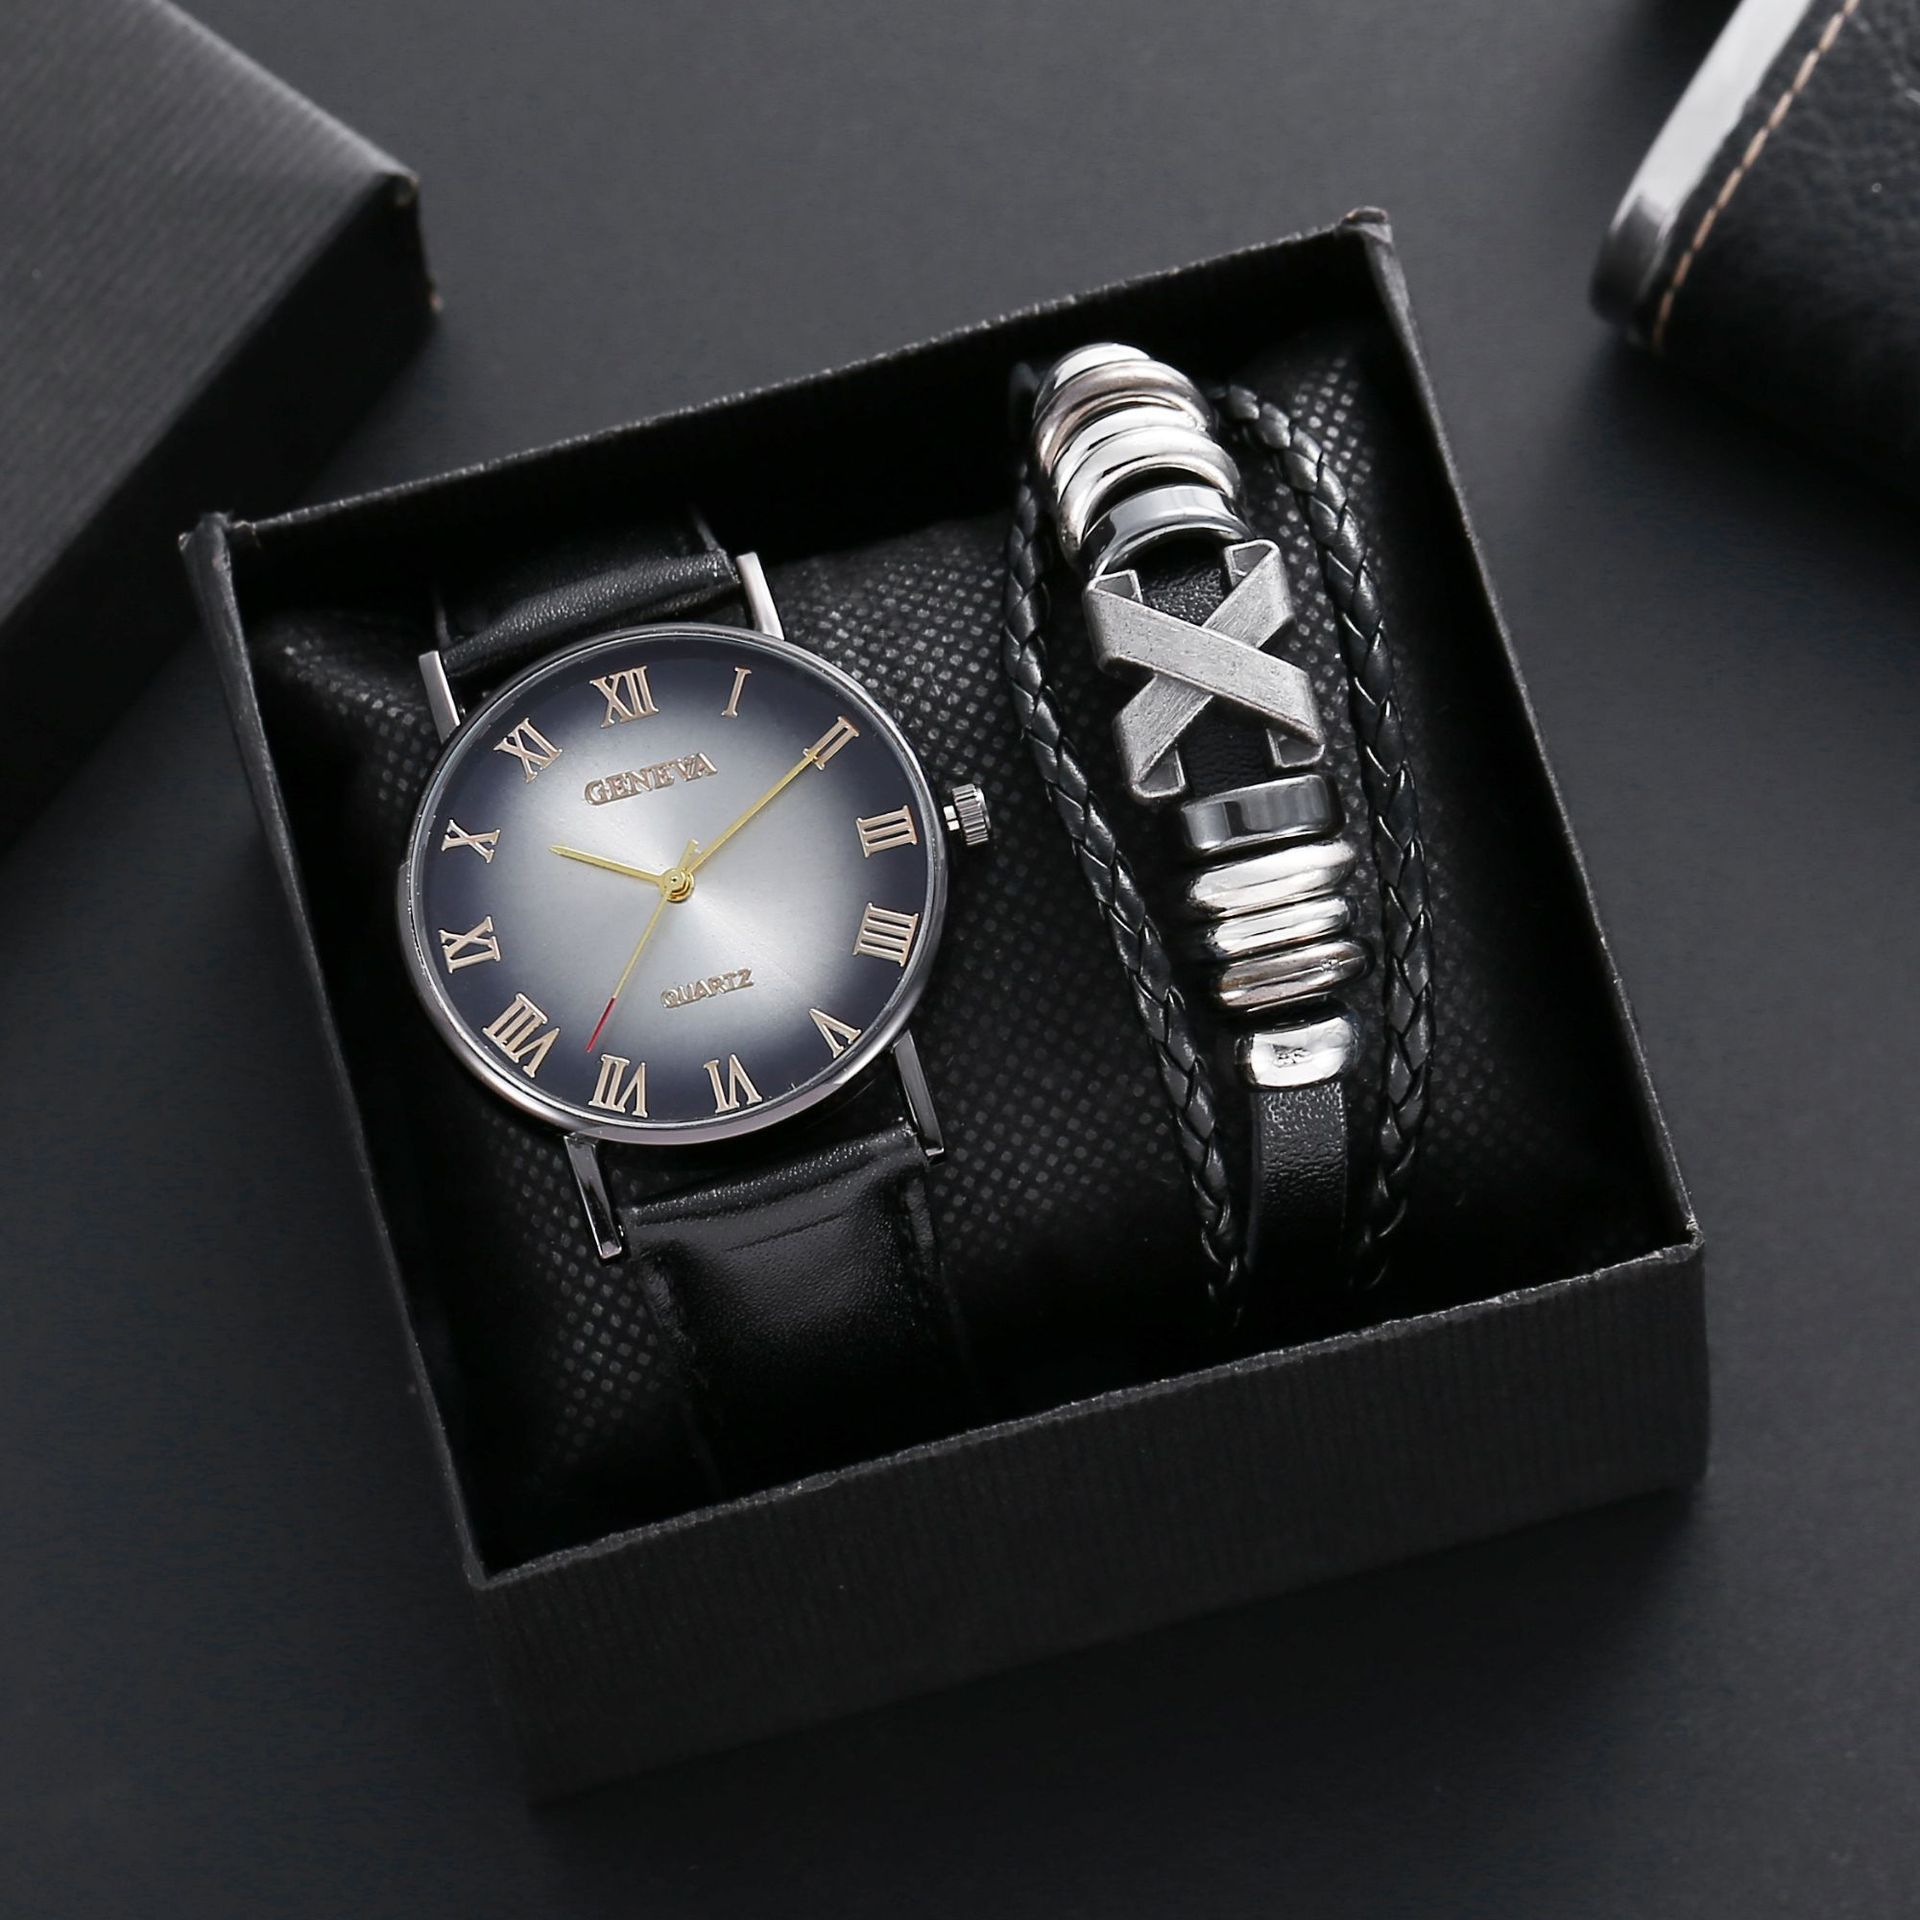 7  watch, bracelet and box